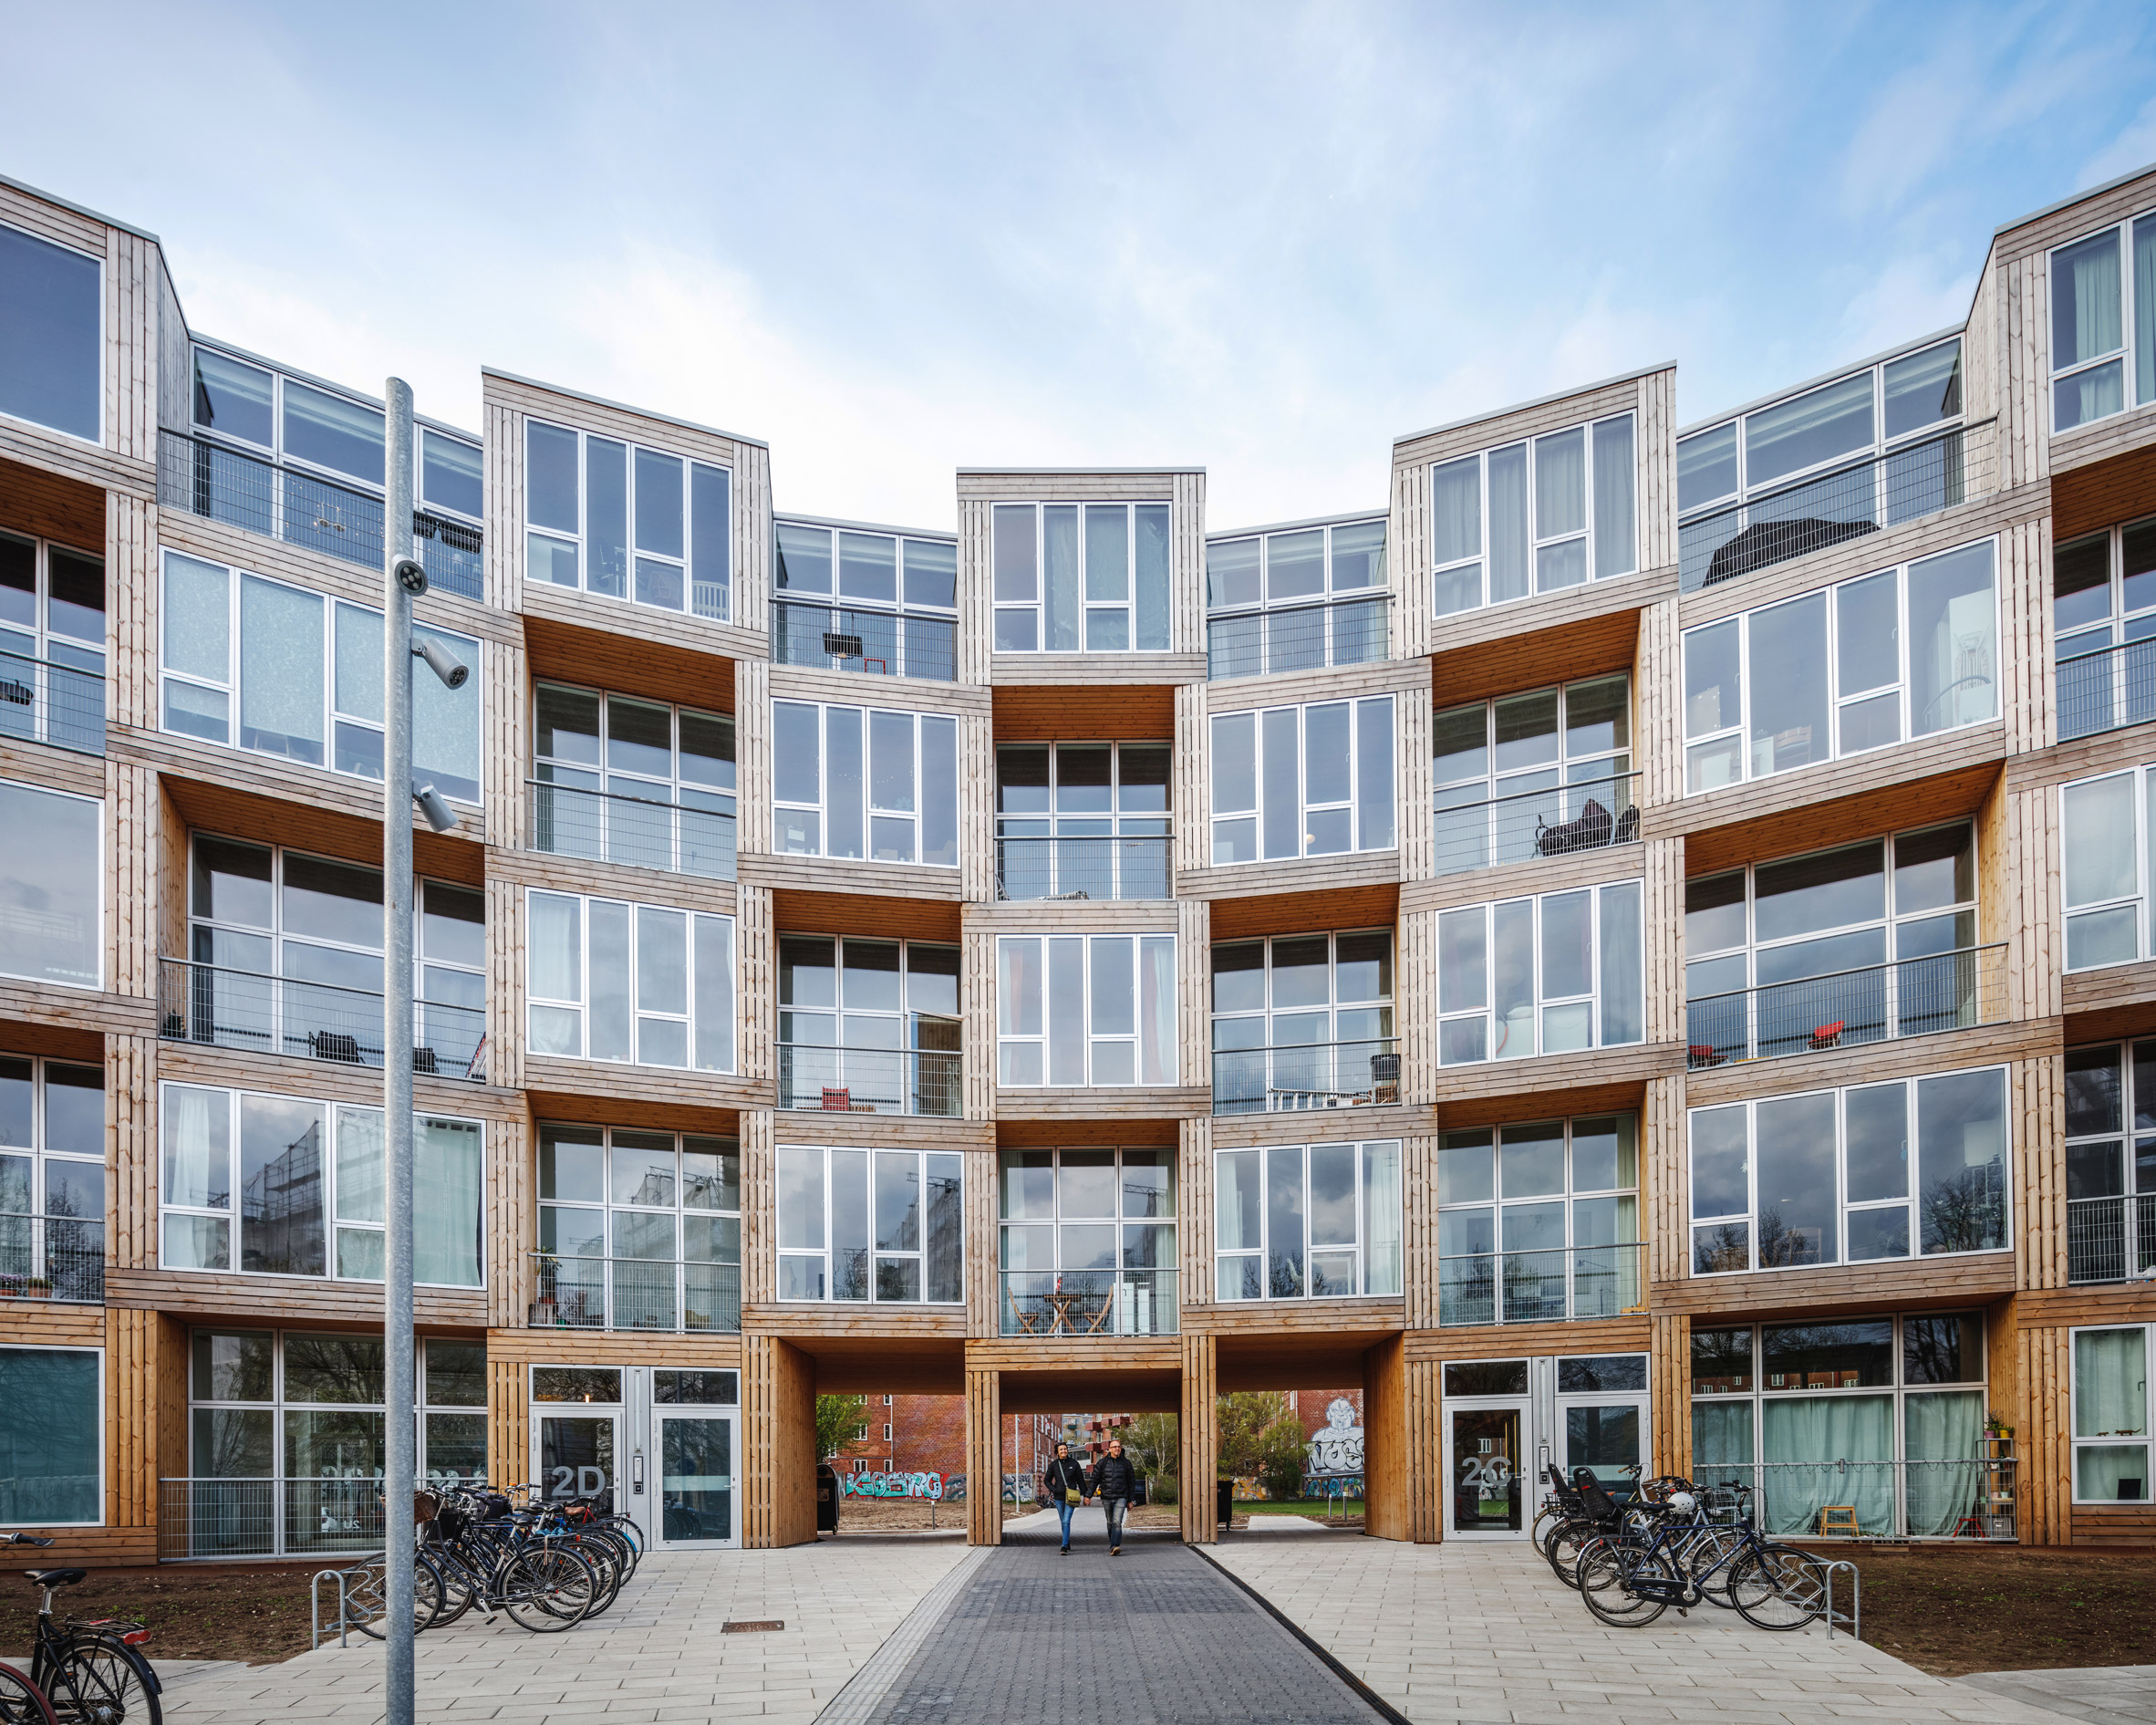 This Light and Spacious Sky-High Apartment Celebrates Scandinavian Design